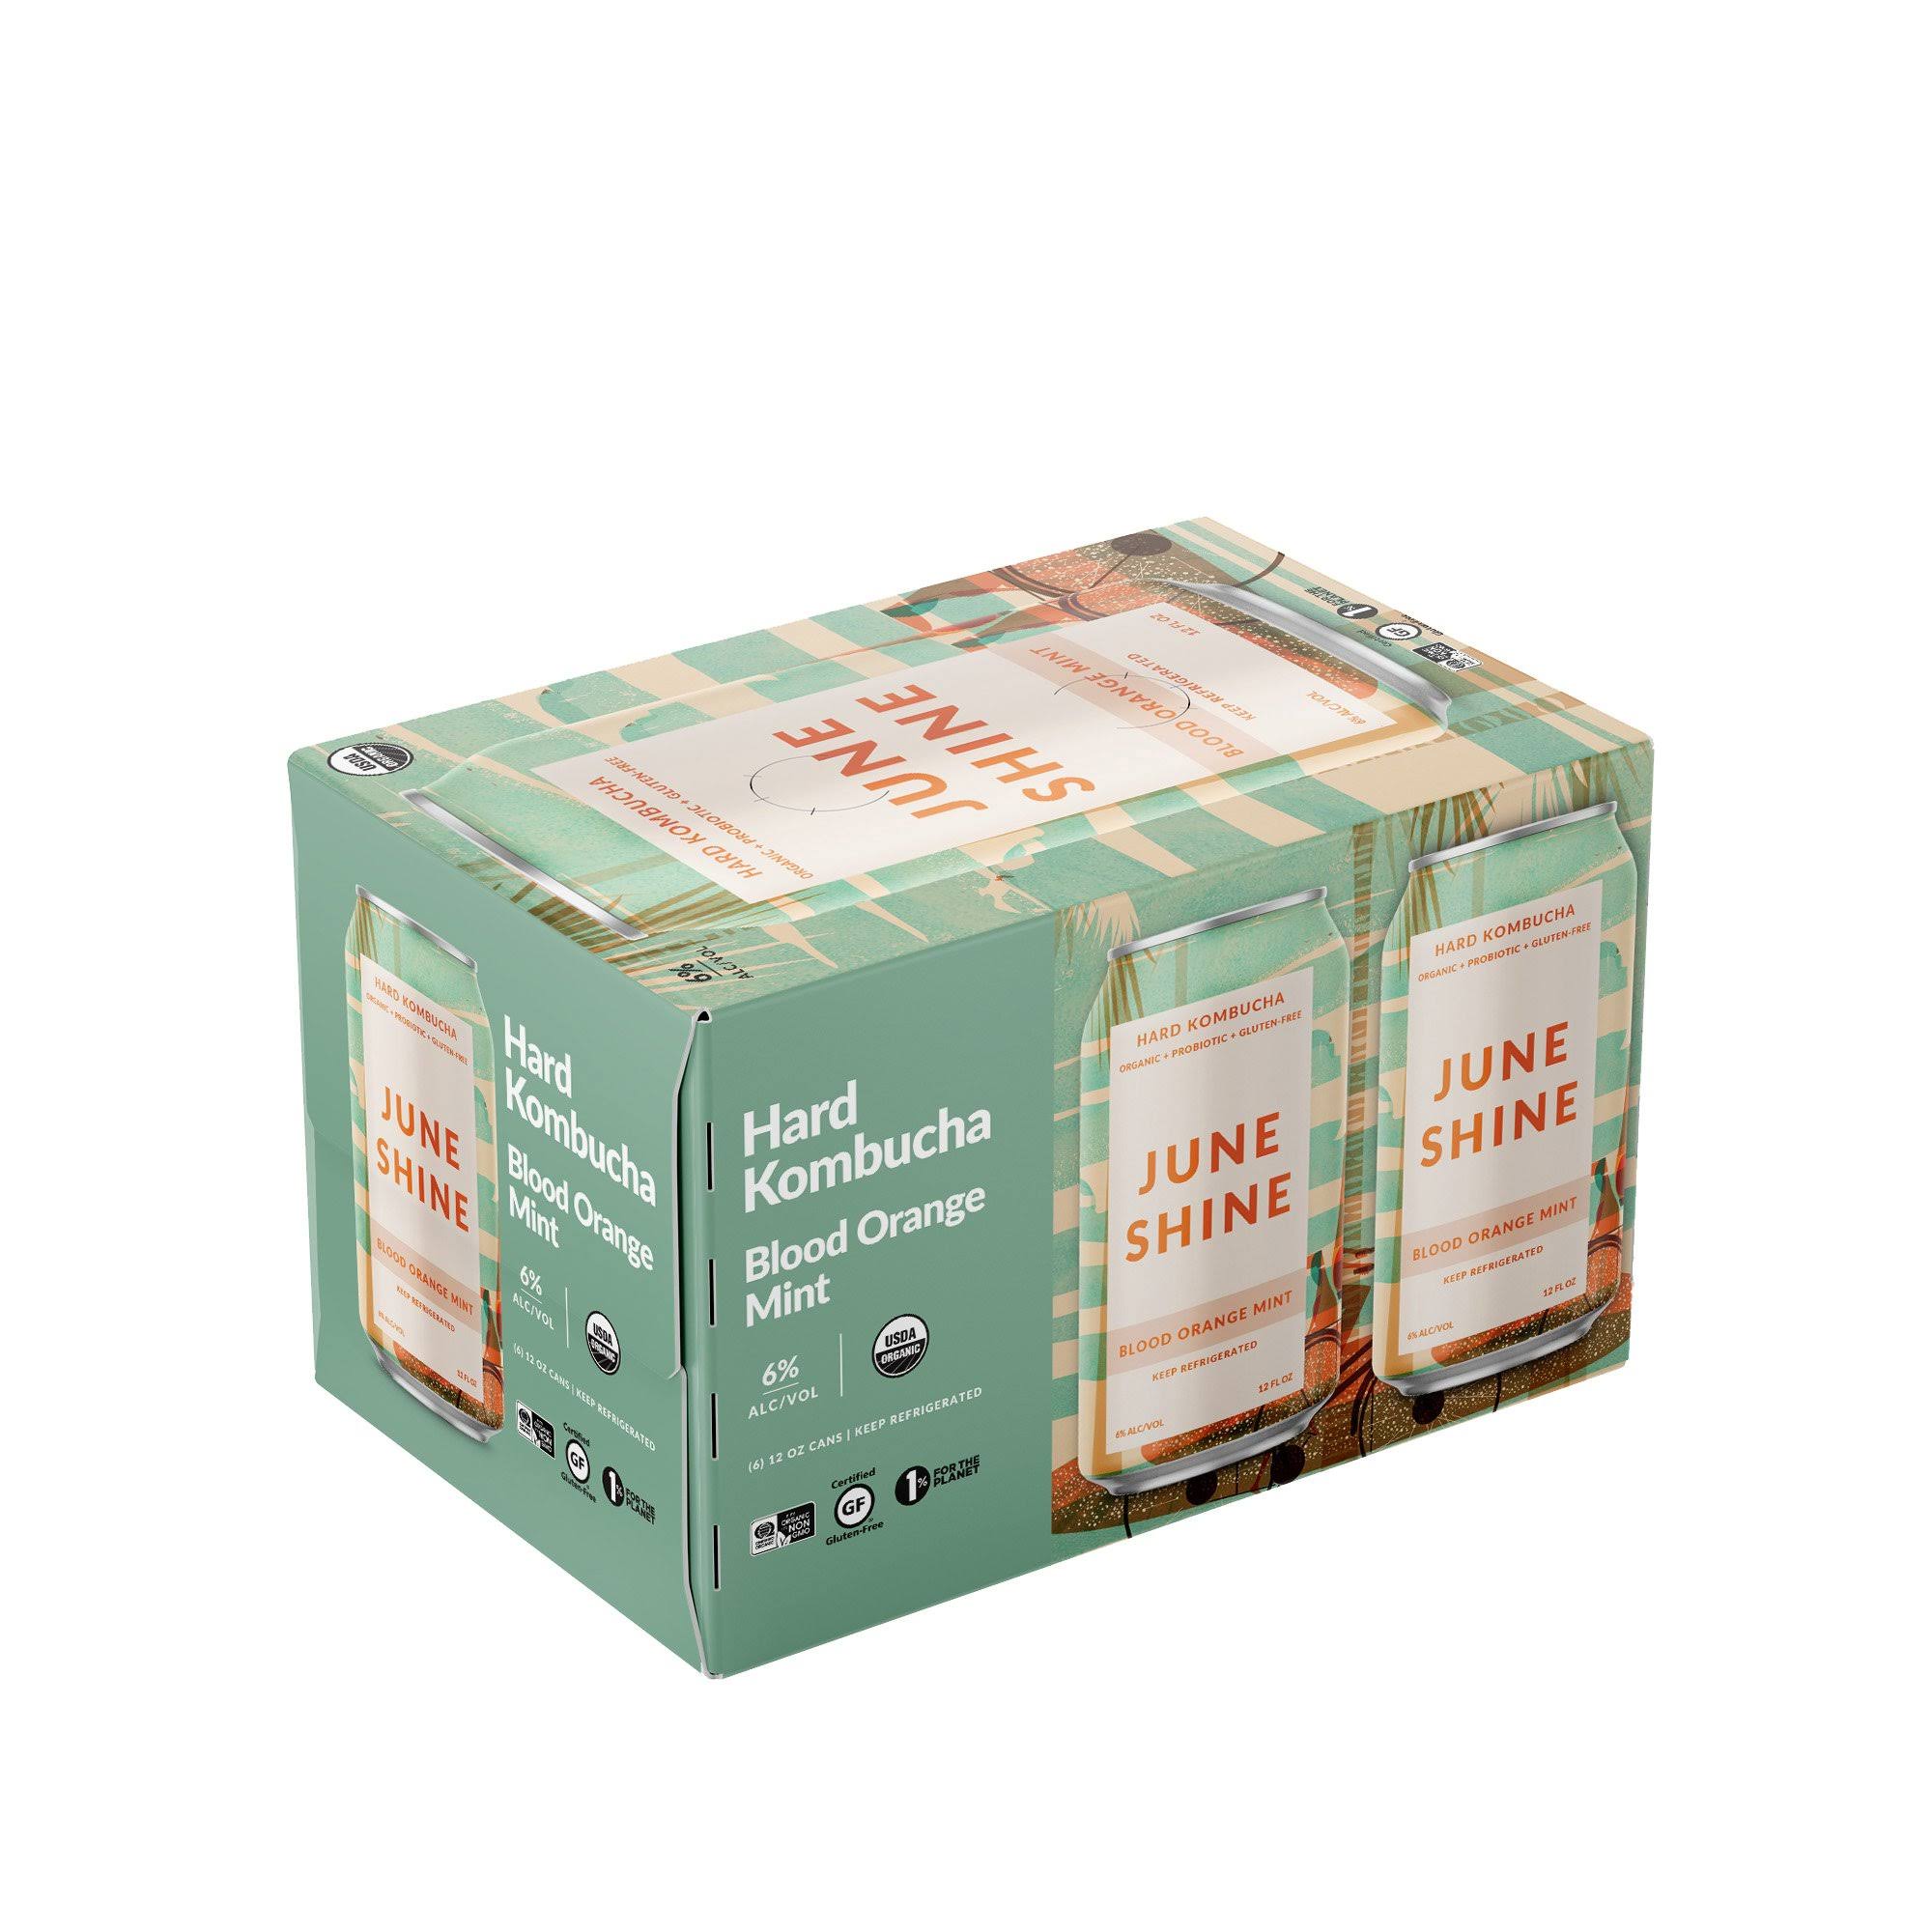 June Shine Hard Kombucha, Blood Orange Mint, 6 Pack - 6 pack, 12 oz cans